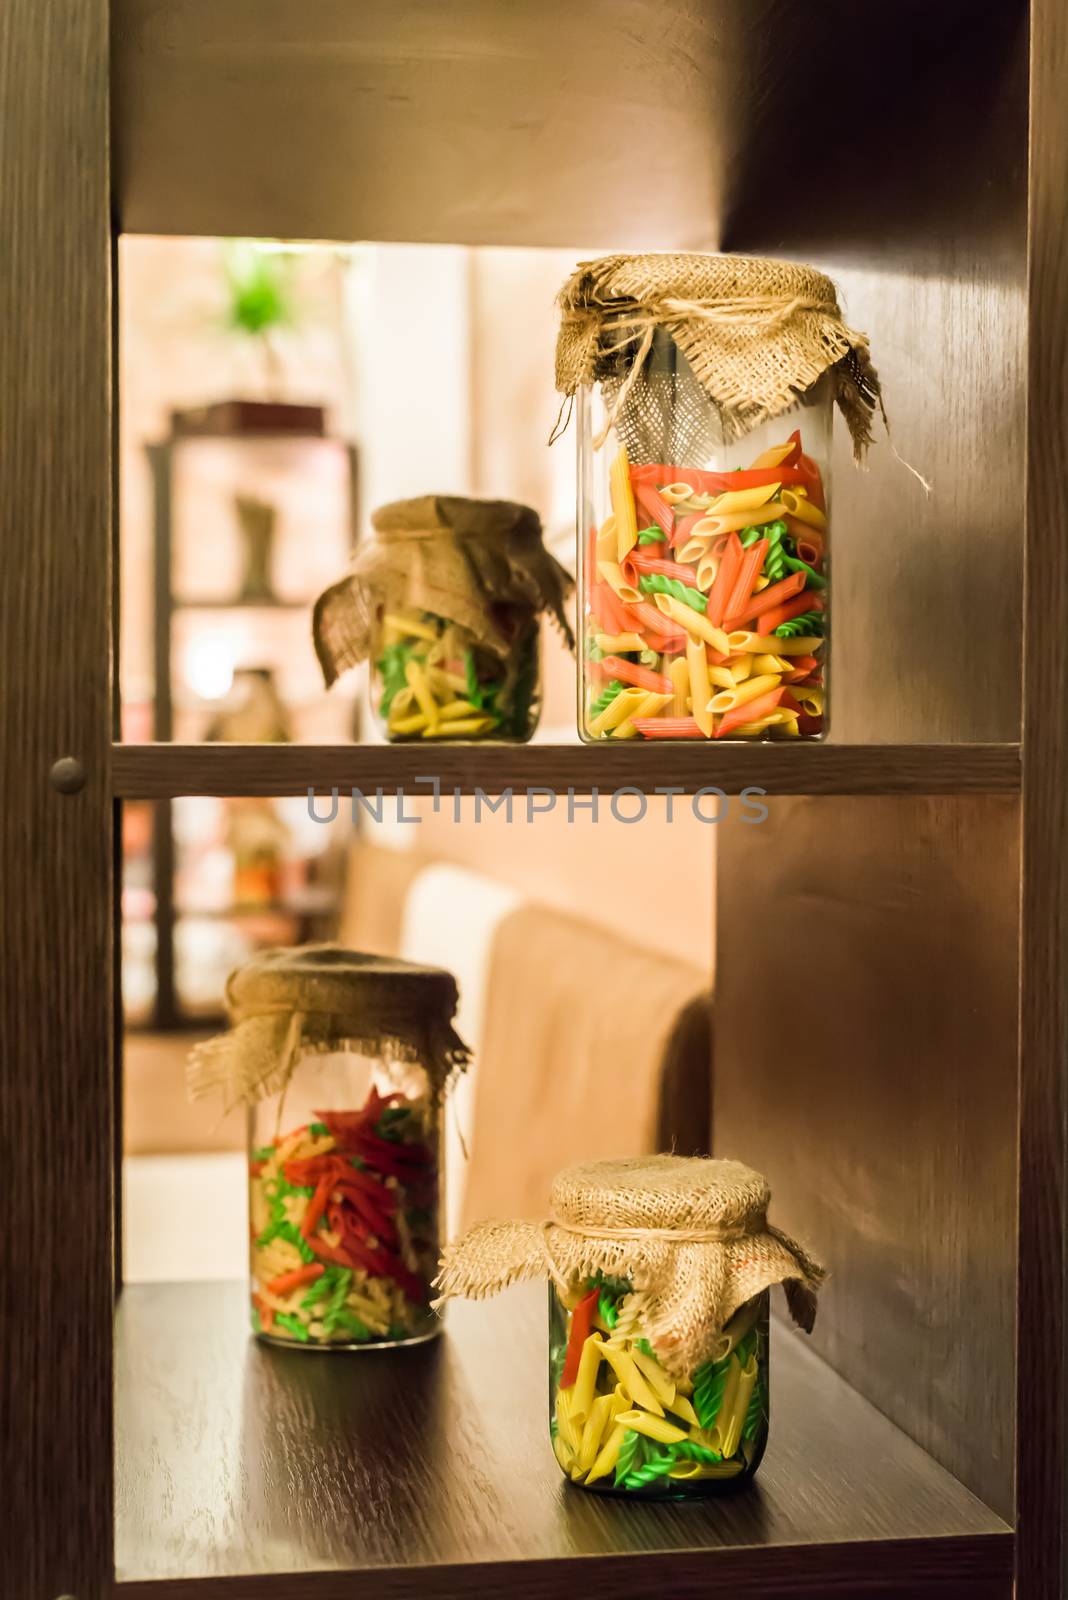 Colored pasta in glass jars by okskukuruza